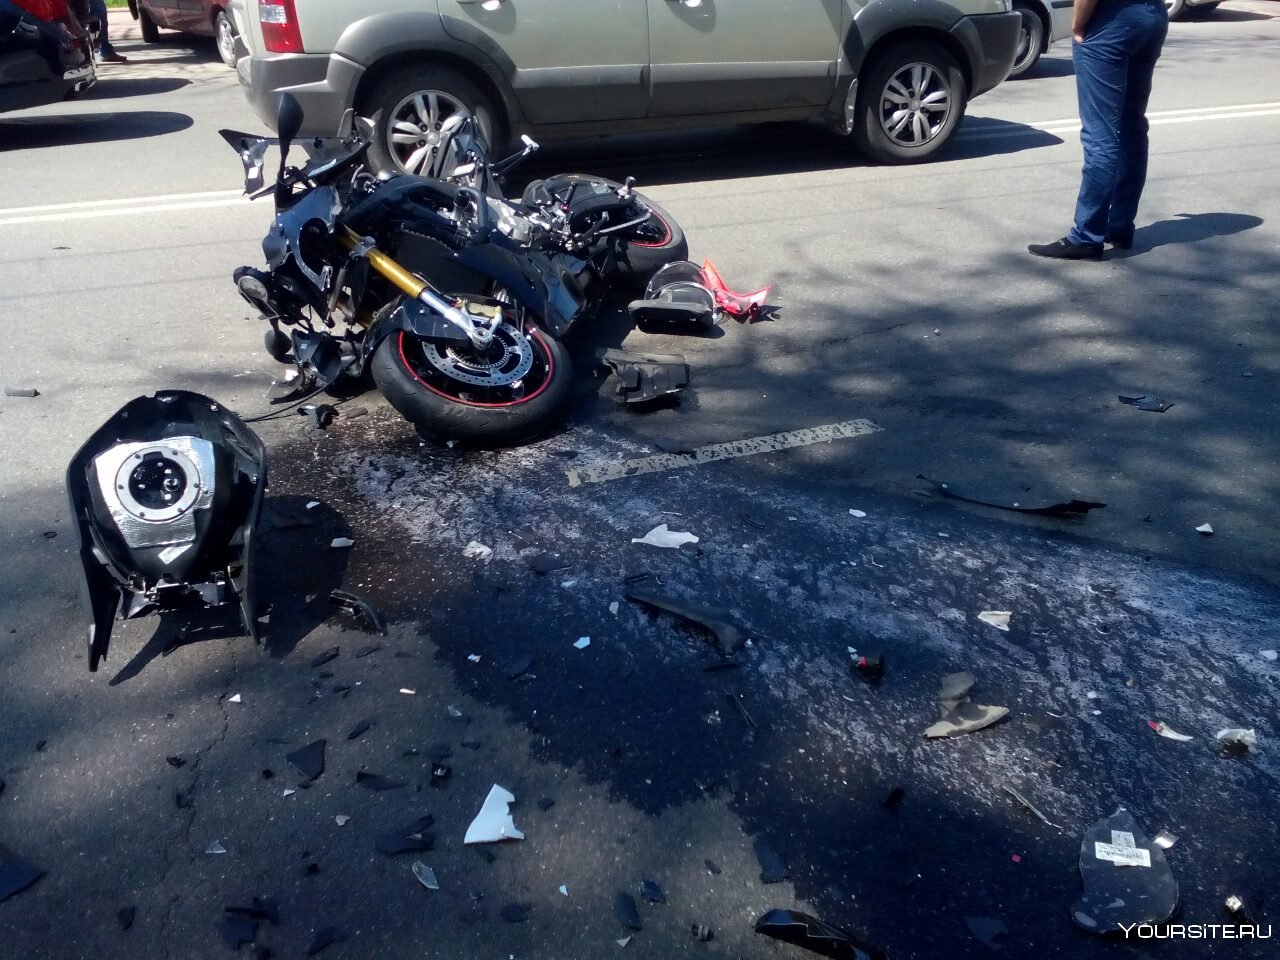 Мотоцикл после аварии. Разбитый мотоцикл 1000rr БМВ.